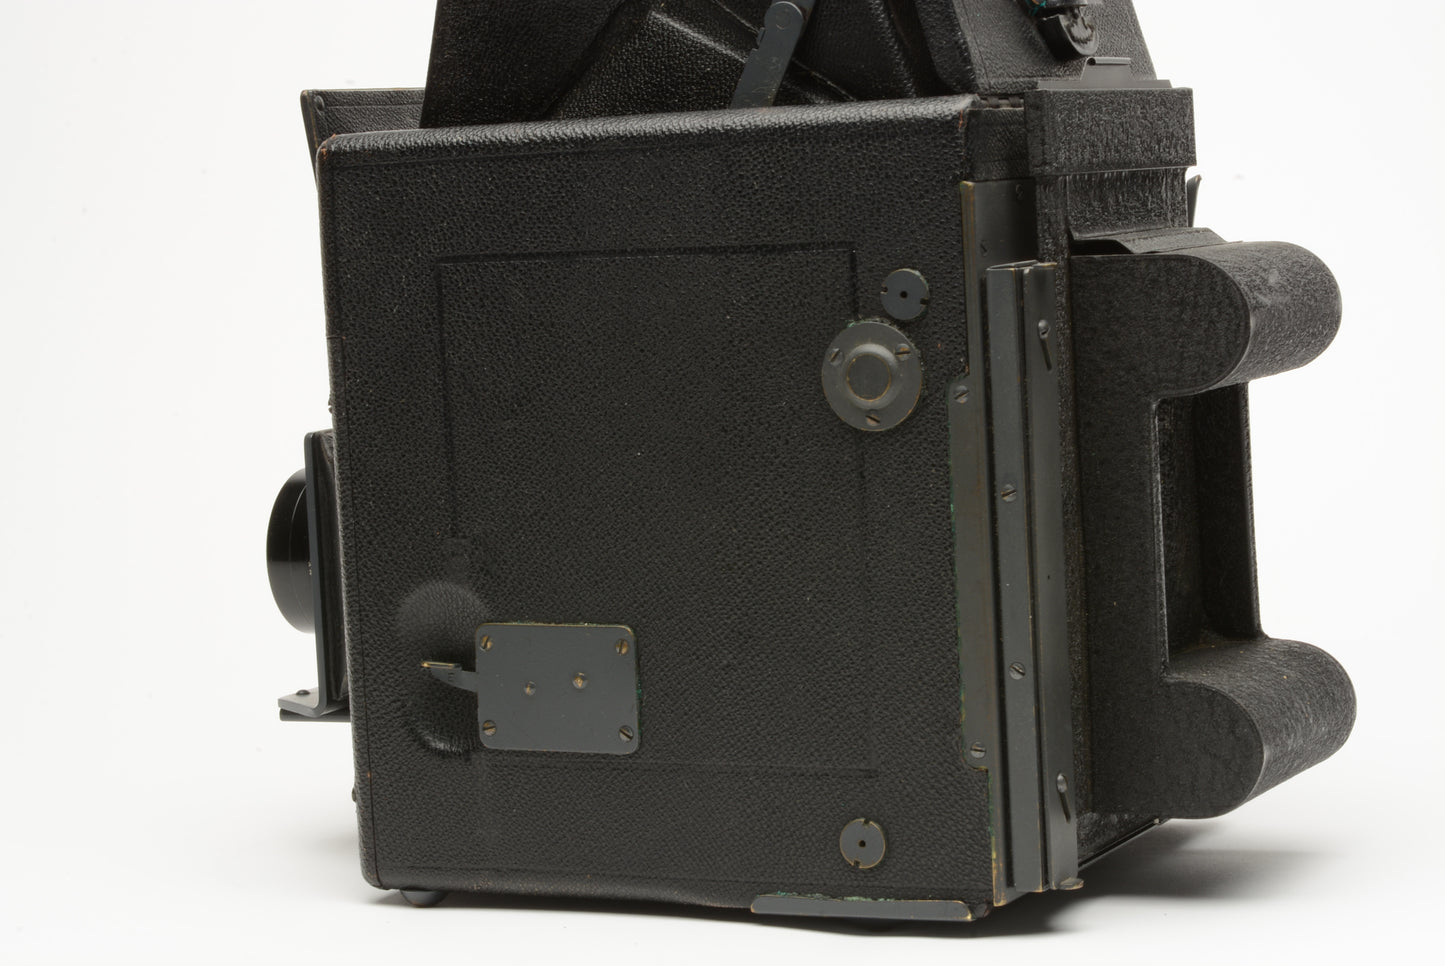 Folmer Graflex R B Series B w/Kodak #32 6 3/8" f4.5 Lens, Nice Vintage